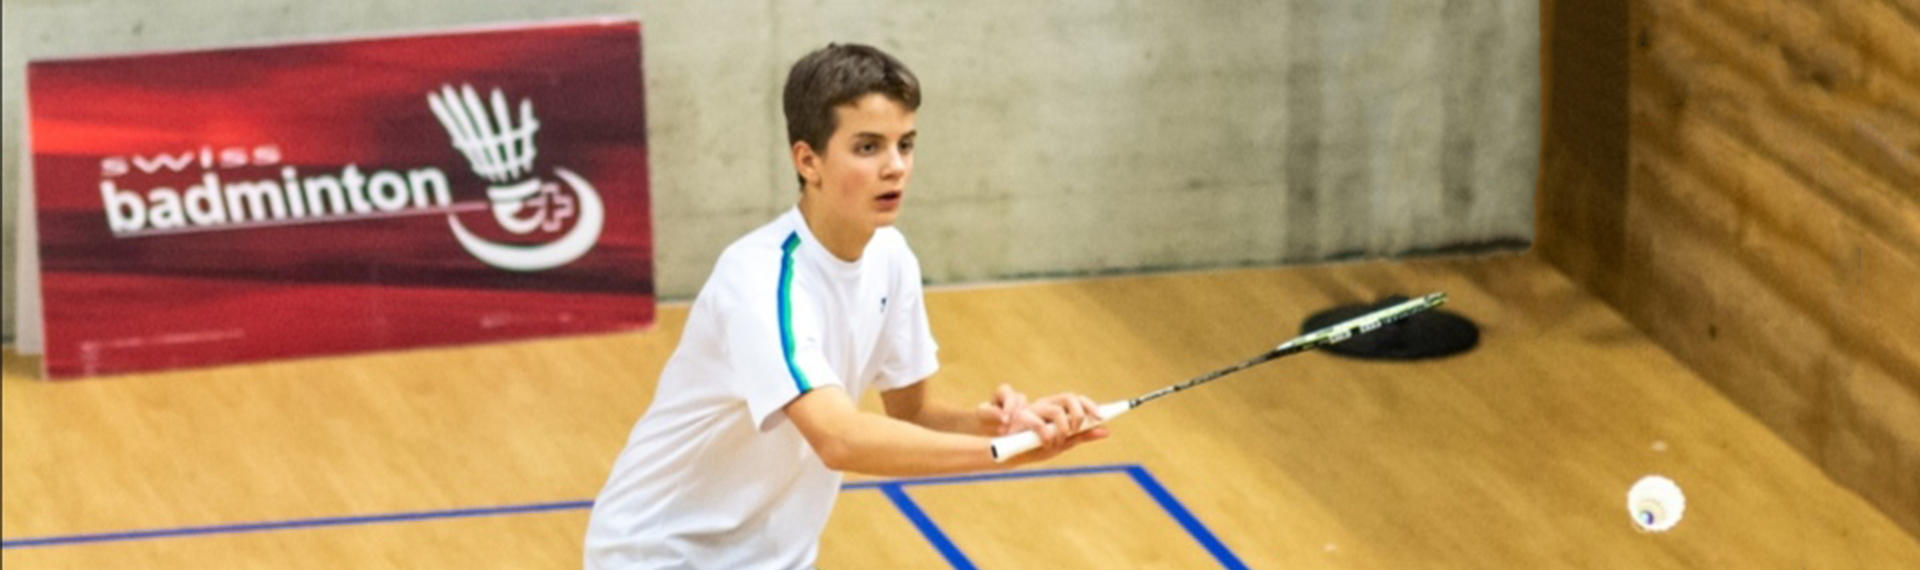 Nicolas Franconville, badminton : privatbank Bonhôte